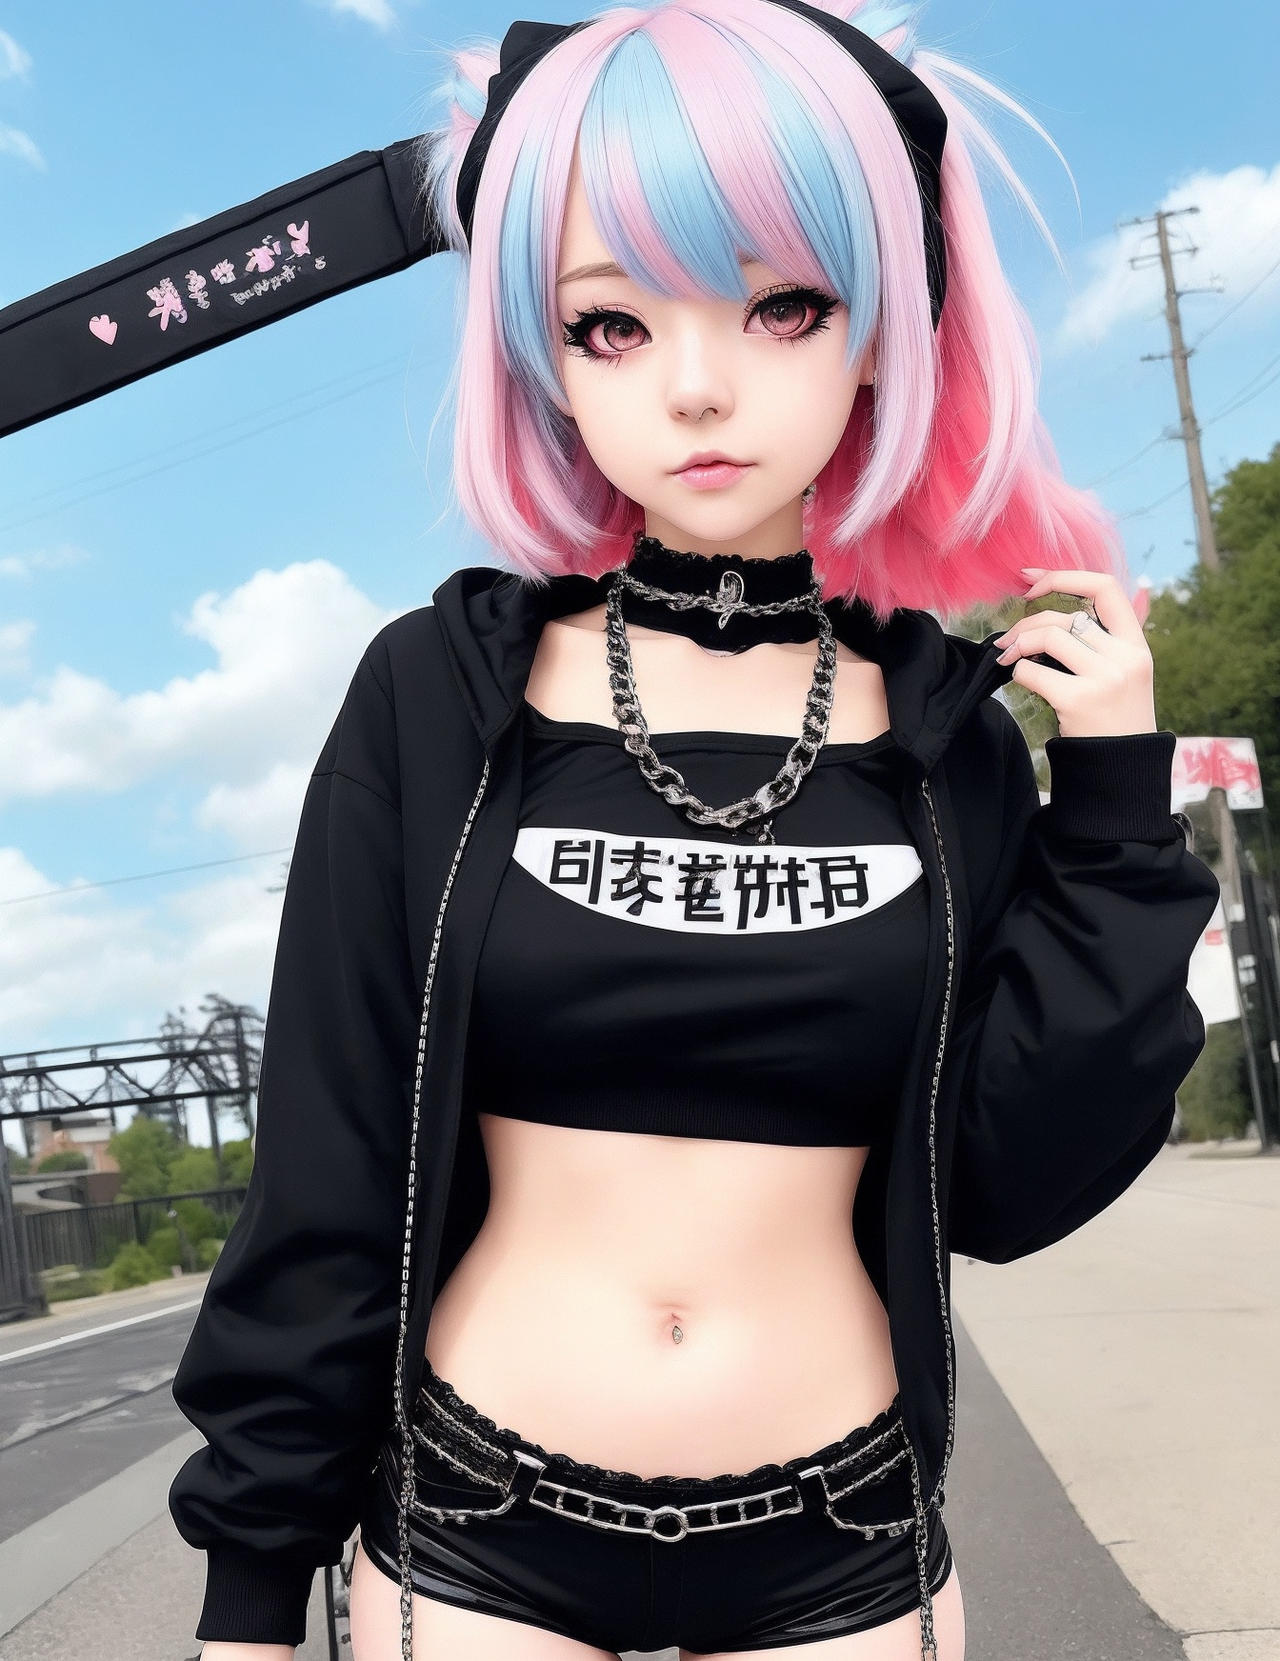 Anime punk Girl Ai art 3 by spyderPR on DeviantArt